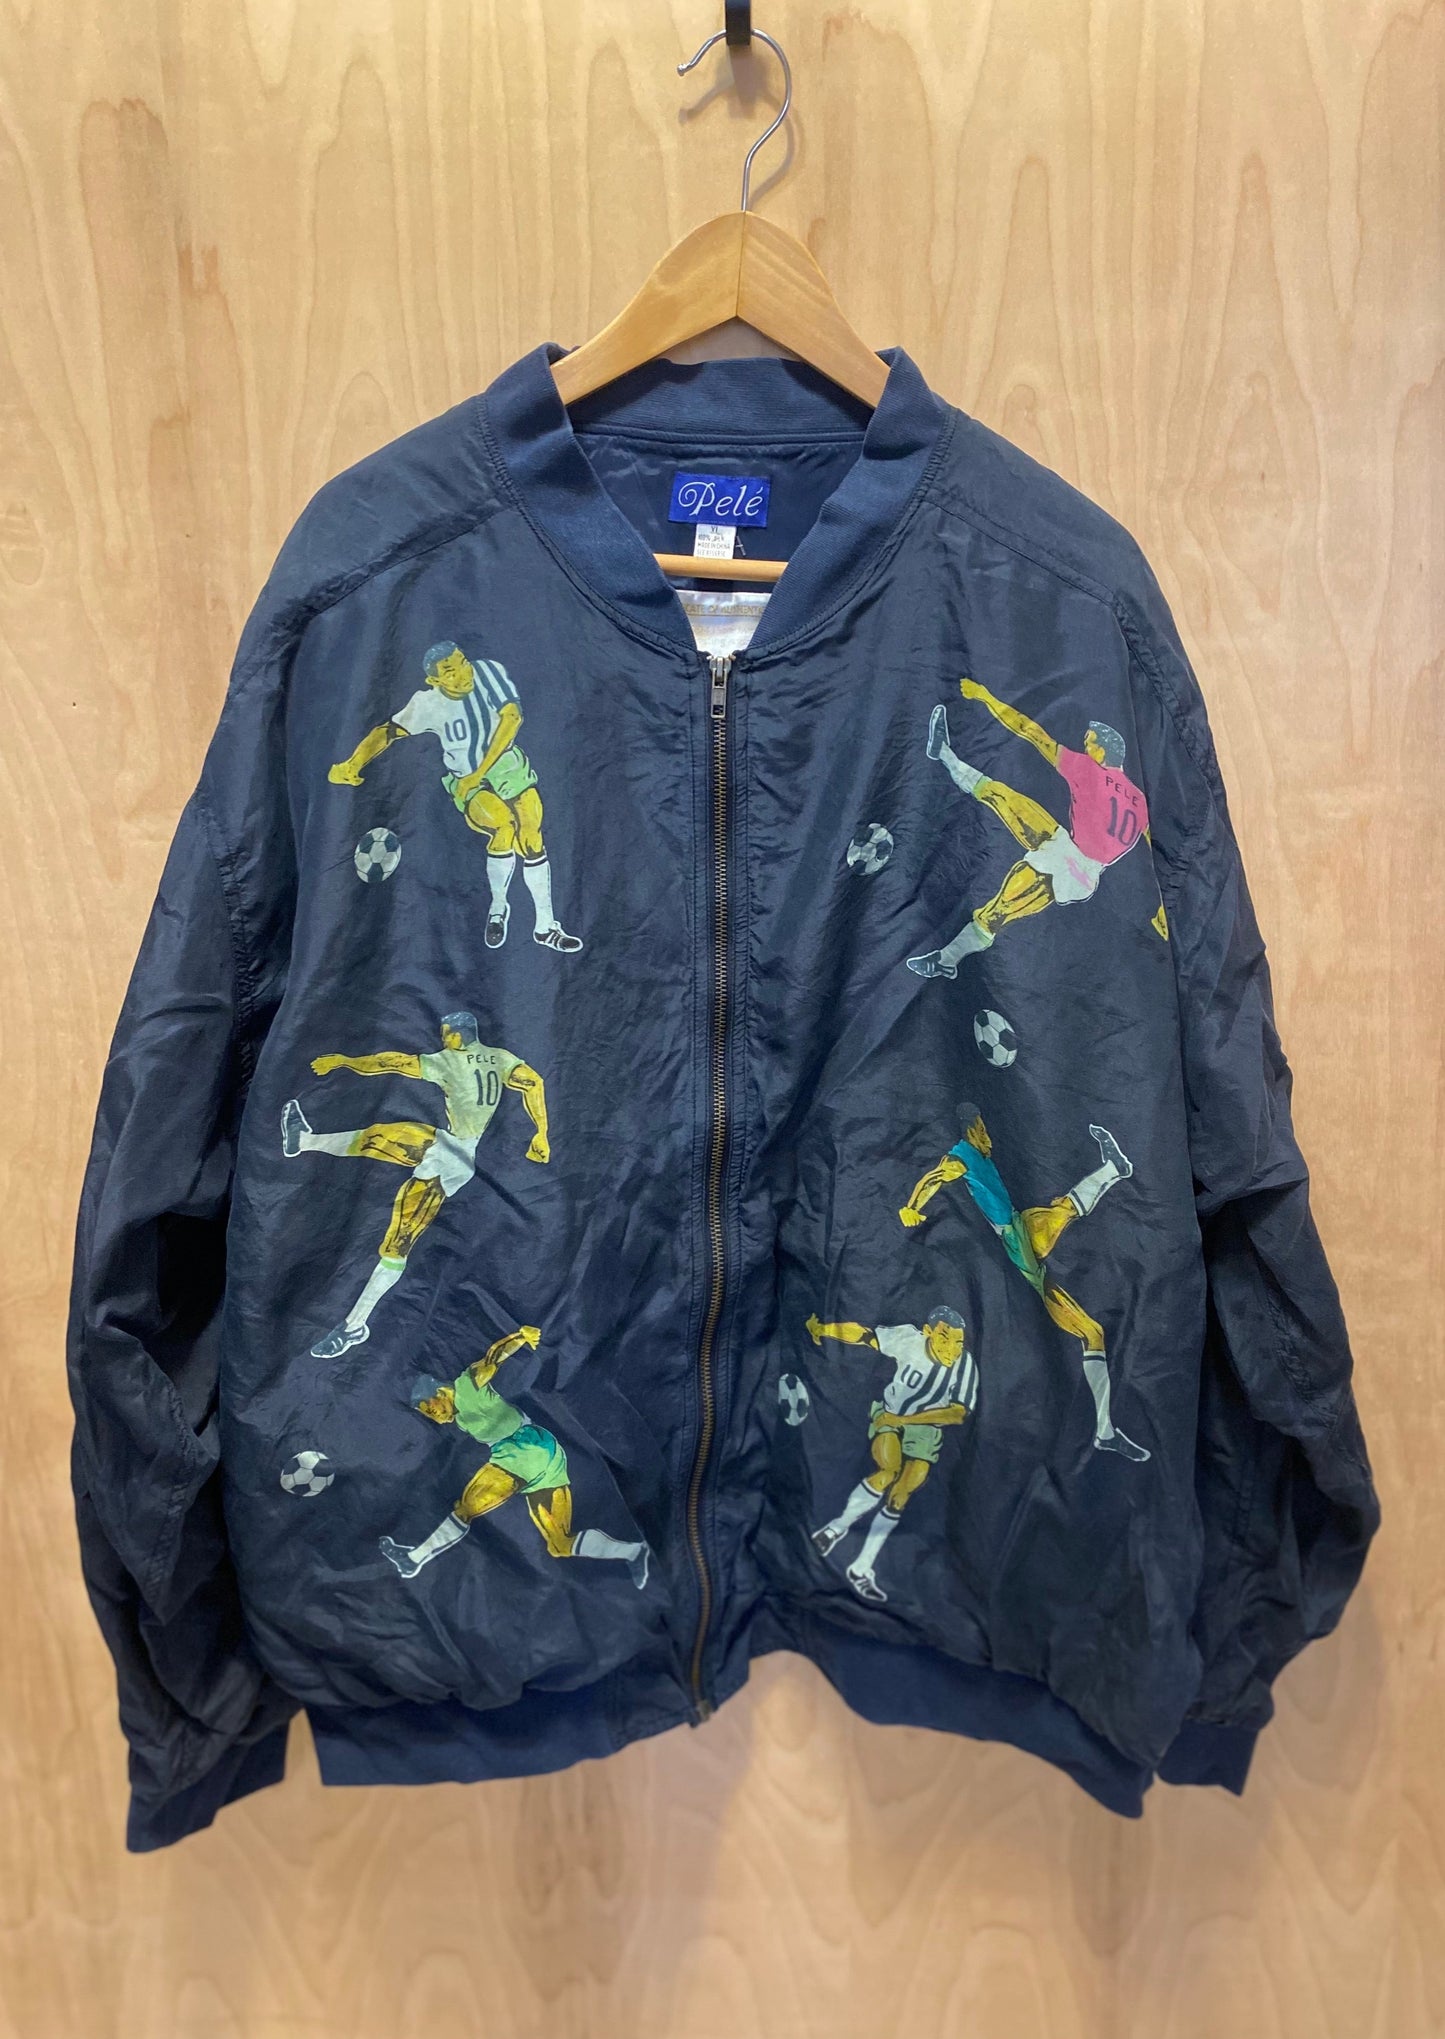 Vintage Authentic "Pele" Soccer bomber Jacket (XL)